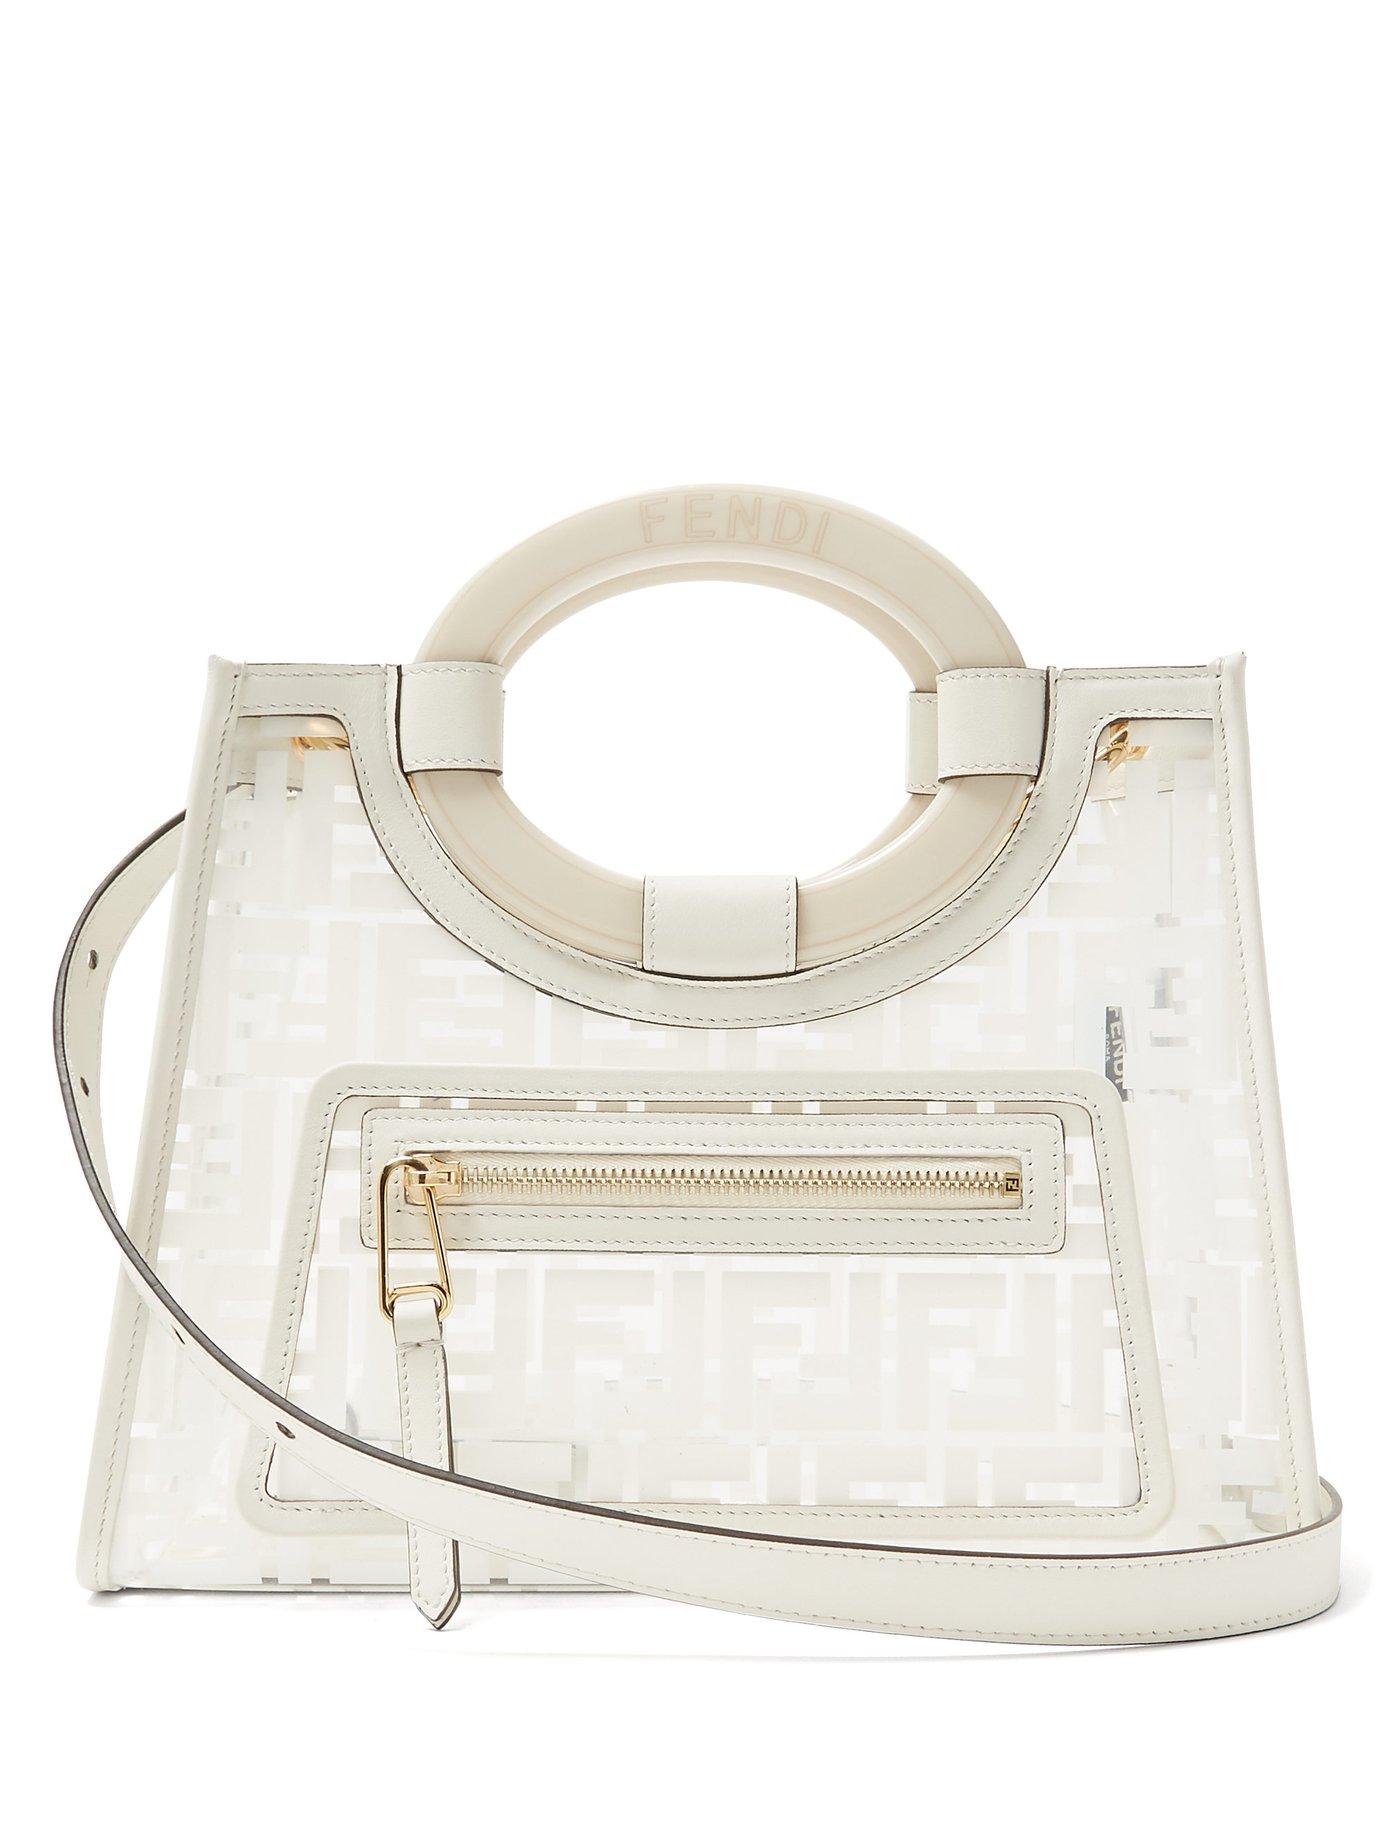 Fendi Runaway Small Leather & Pvc Shoulder Bag in White | Lyst